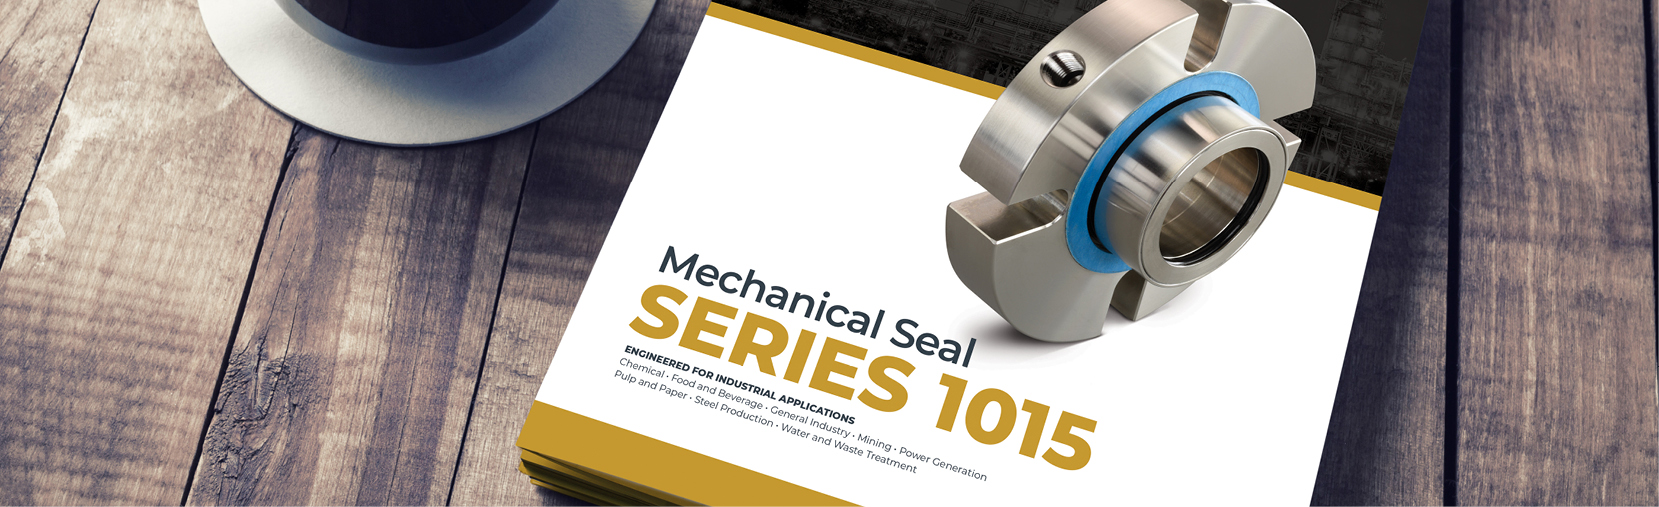 FSI Mechanical Seal Brochure